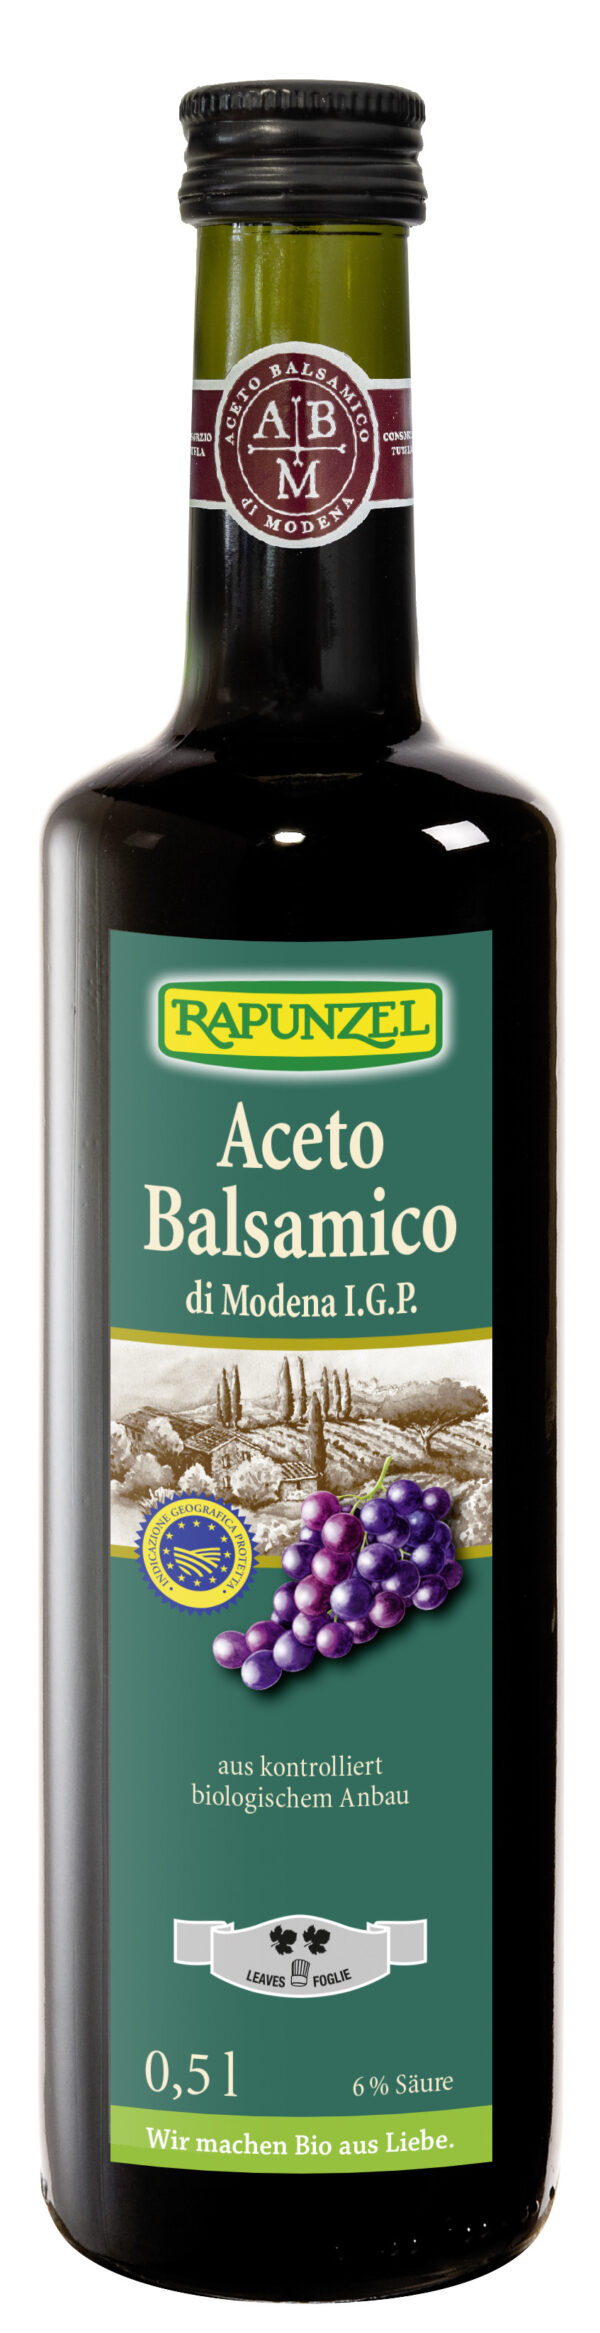 Rapunzel Aceto Balsamico di Modena I.G.P. (Rustico) 6 x 0,5l